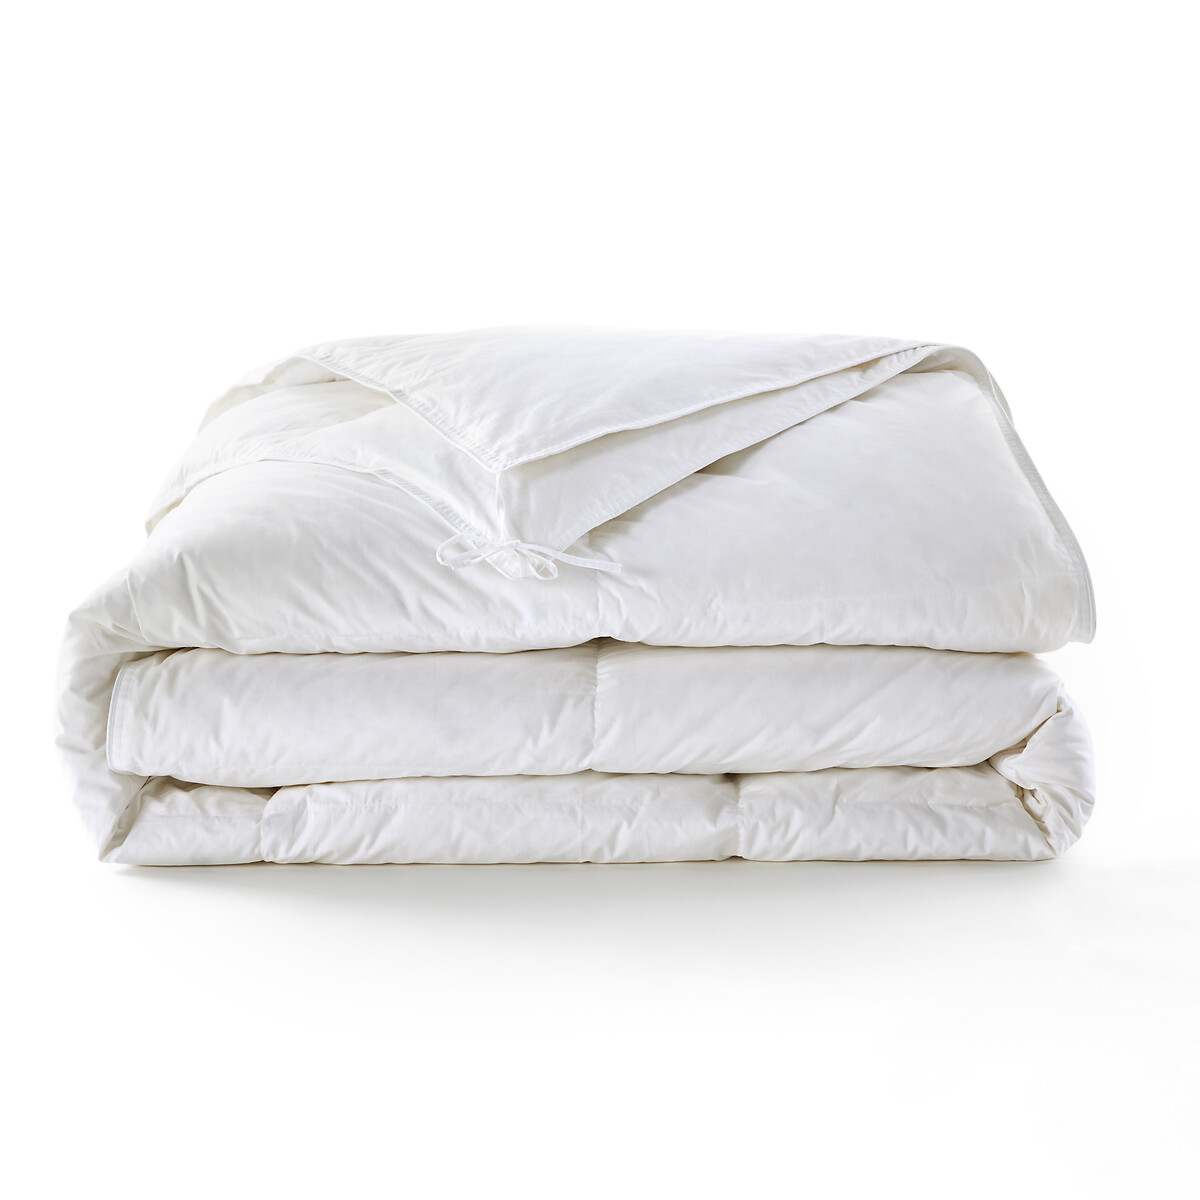 Одеяло LA REDOUTE INTERIEURS Одеяло 4 сезона натуральное 240 x 220 см белый, размер 240 x 220 см - фото 2